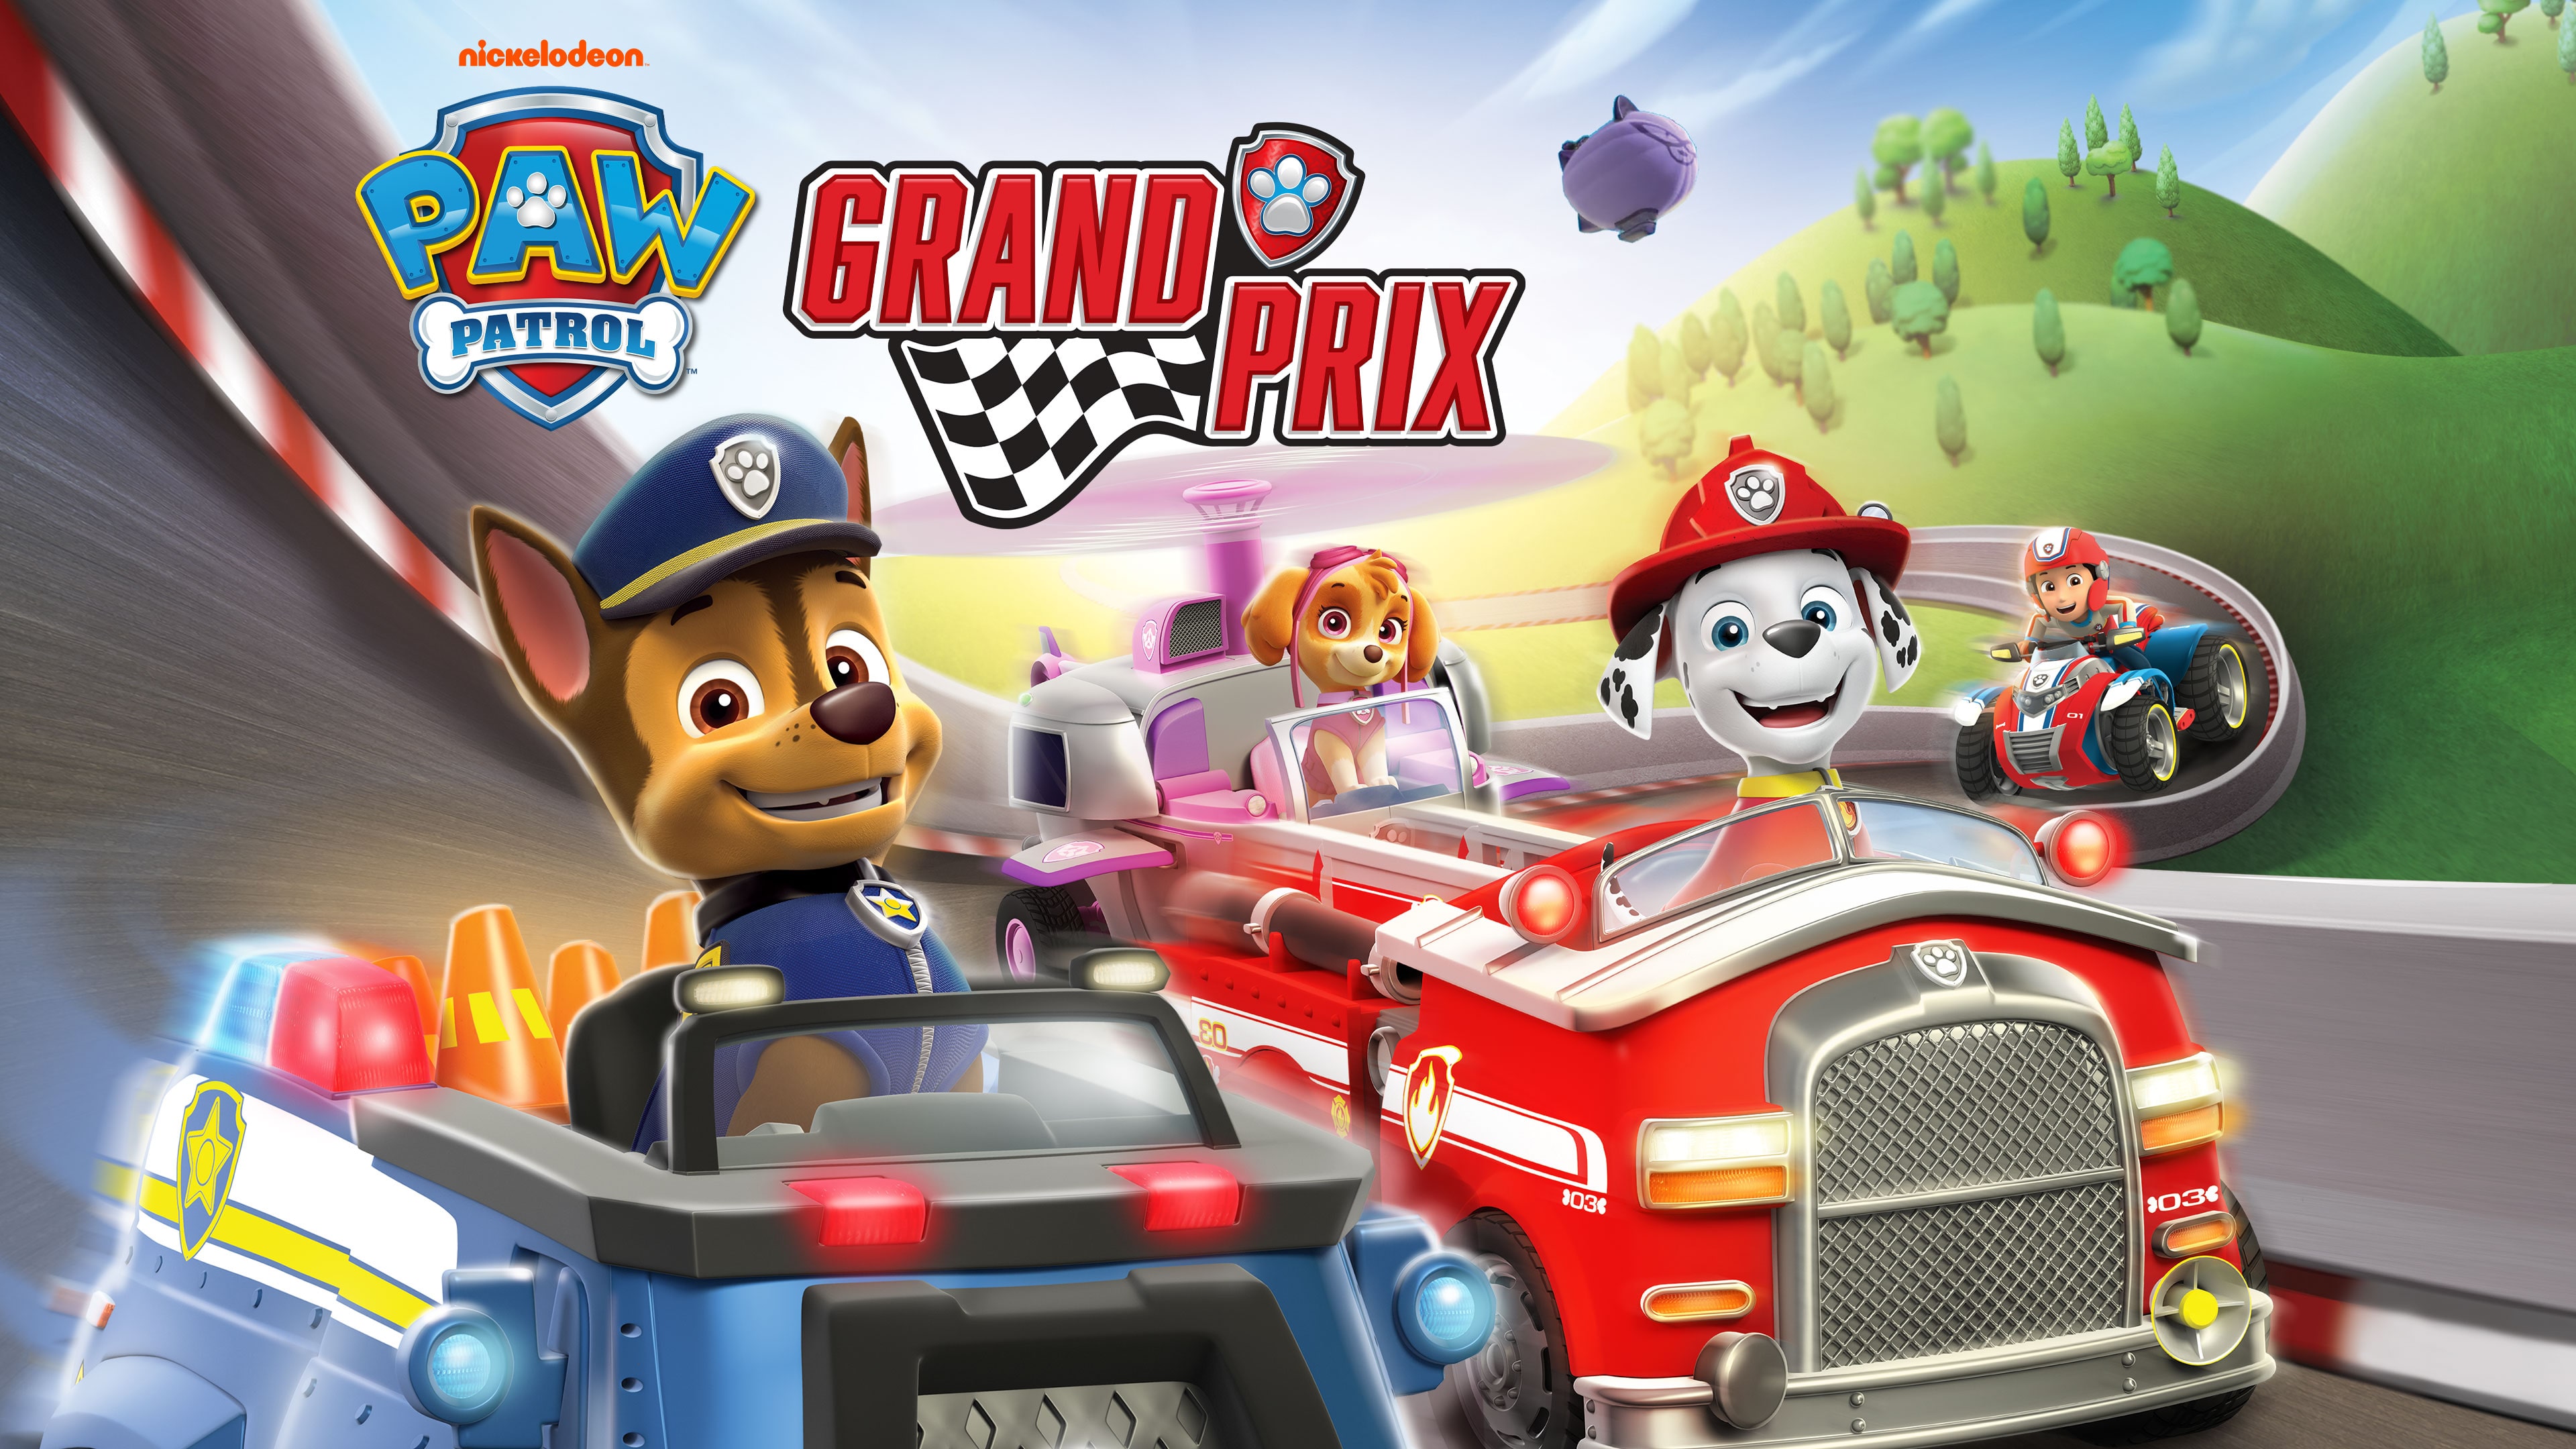 PSI Patrol: Grand Prix